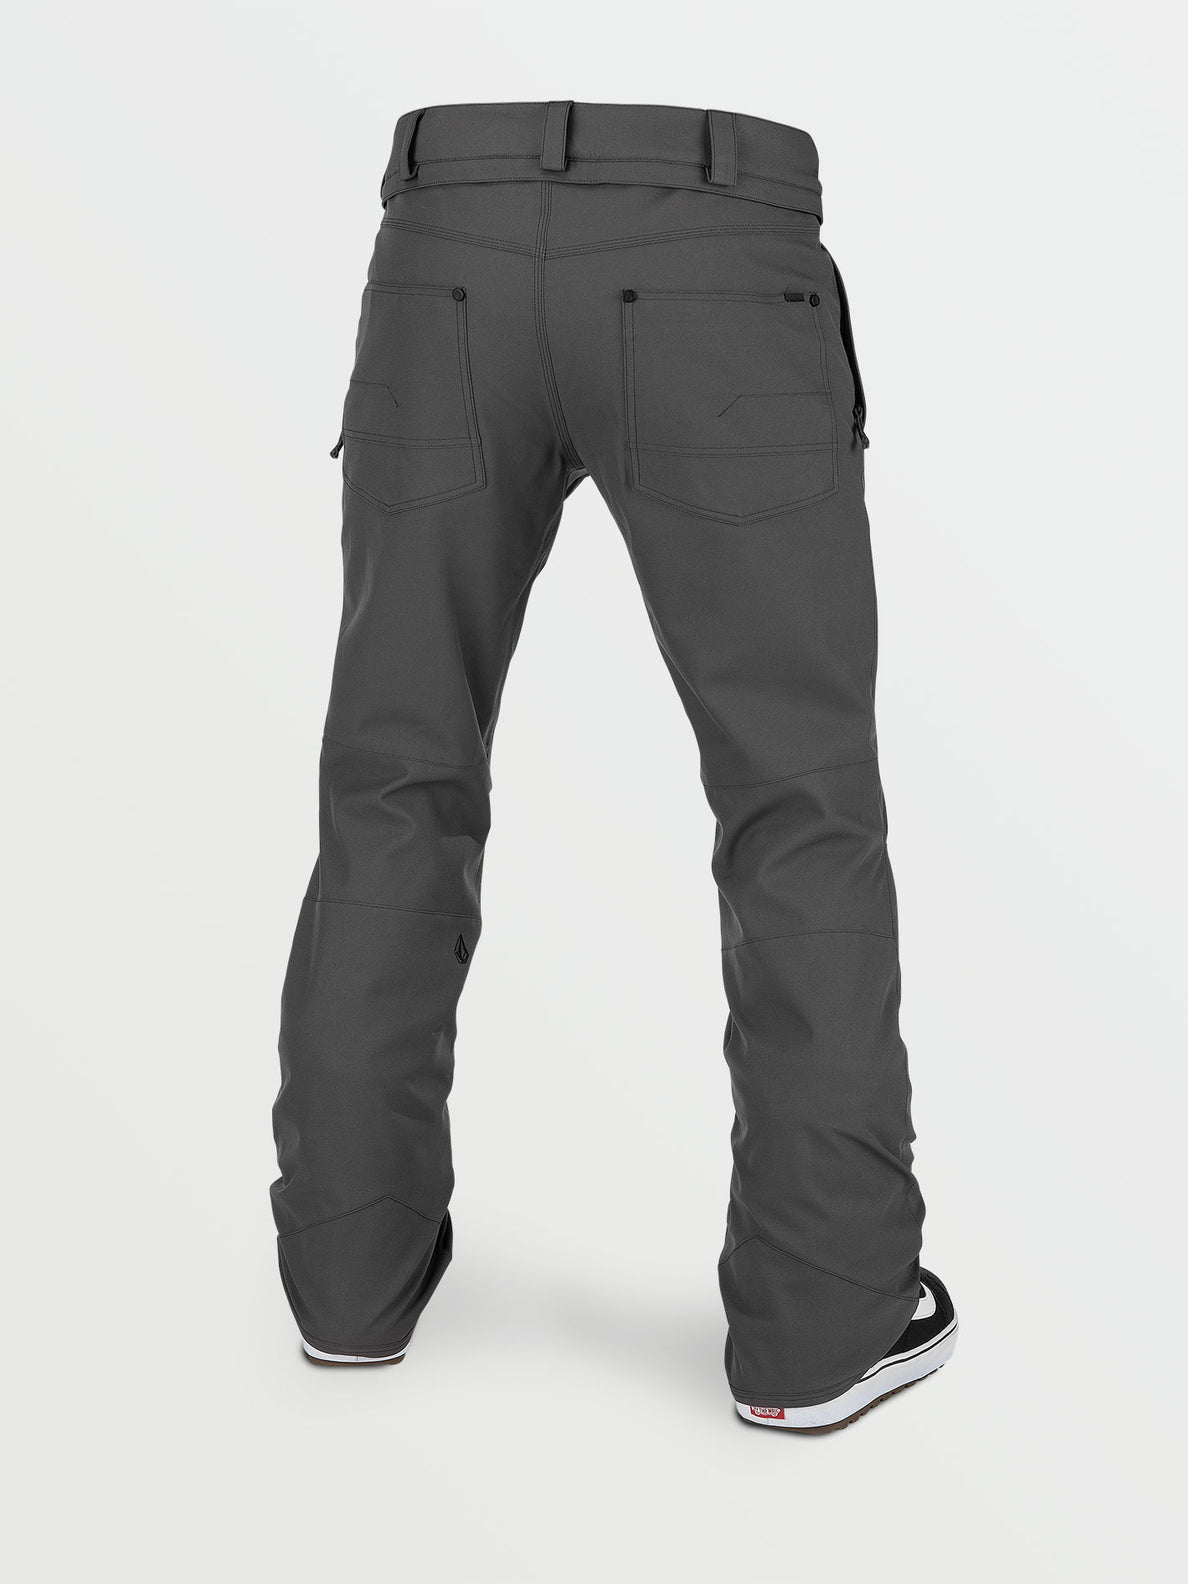 Mens Klocker Tight Pants - Dark Grey (G1352109_DGR) [B]